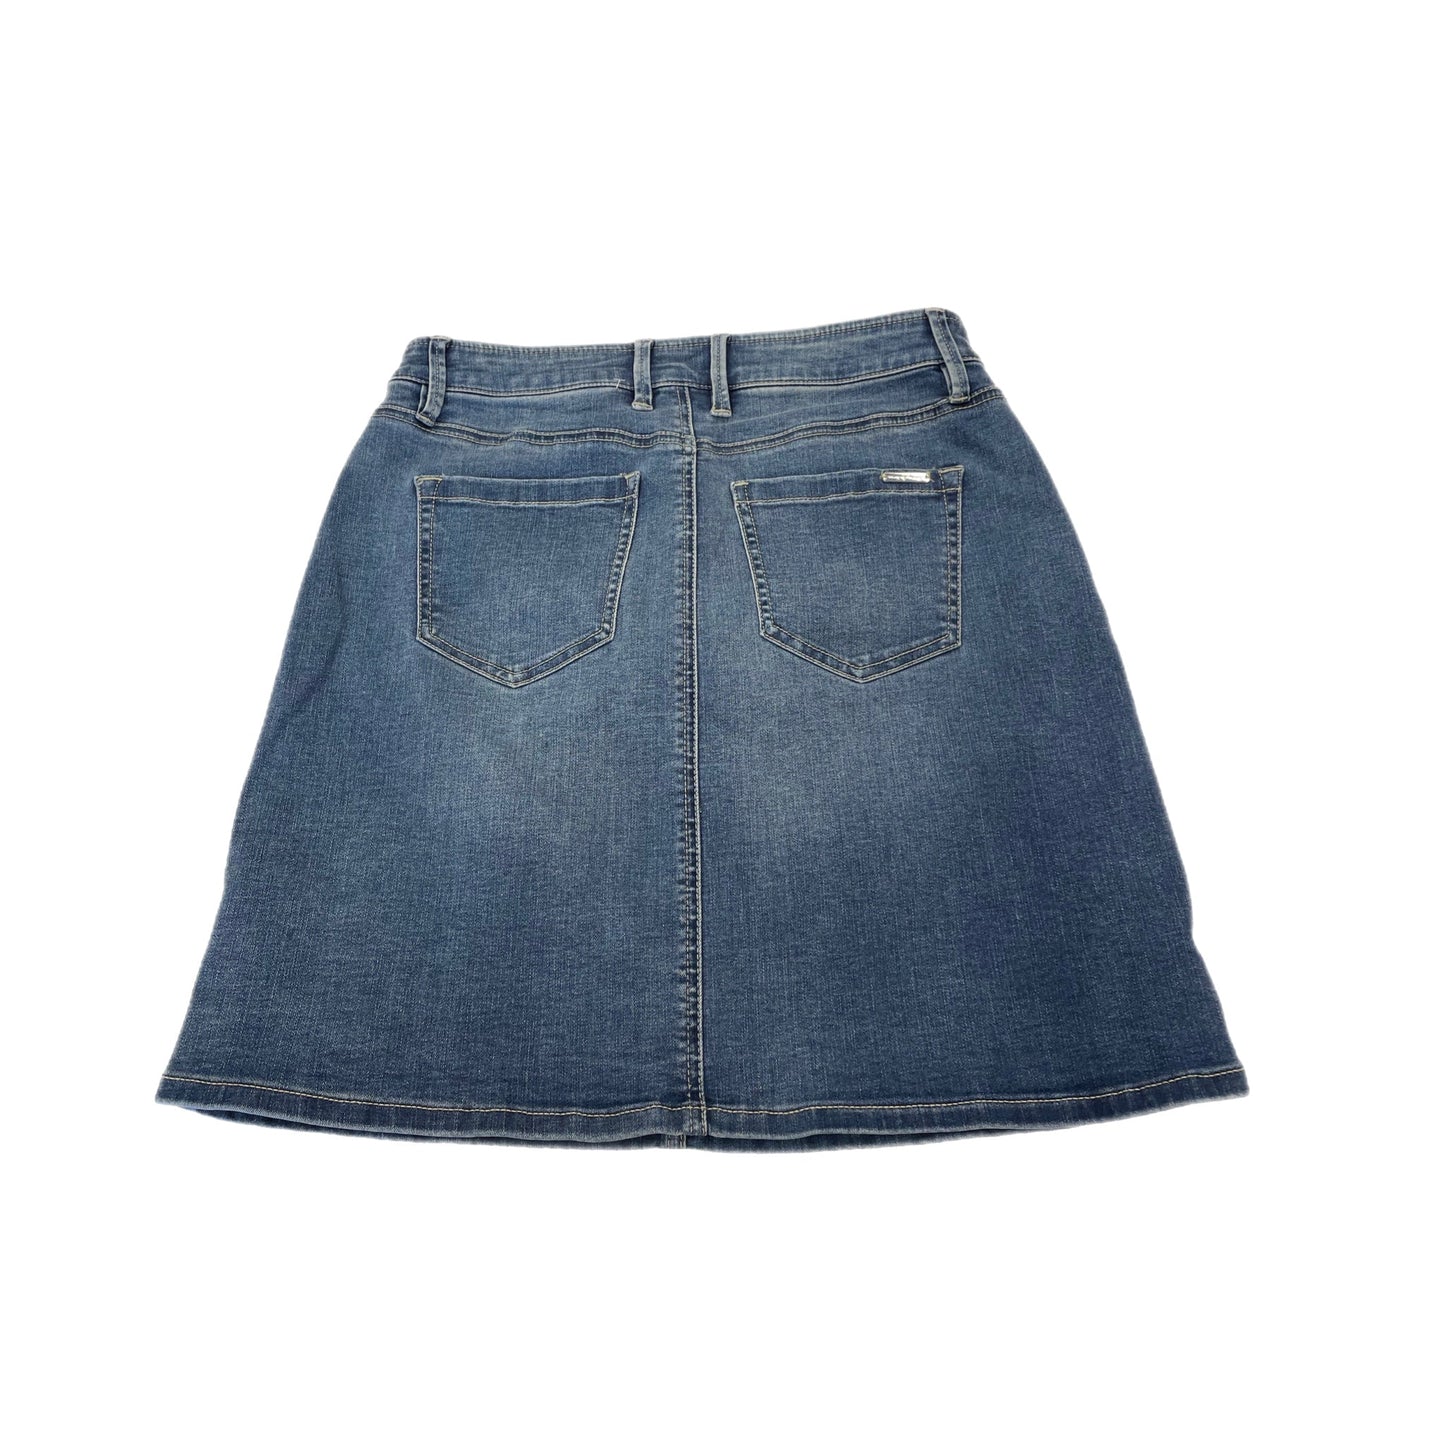 Skirt Mini & Short By Tommy Bahama  Size: 2